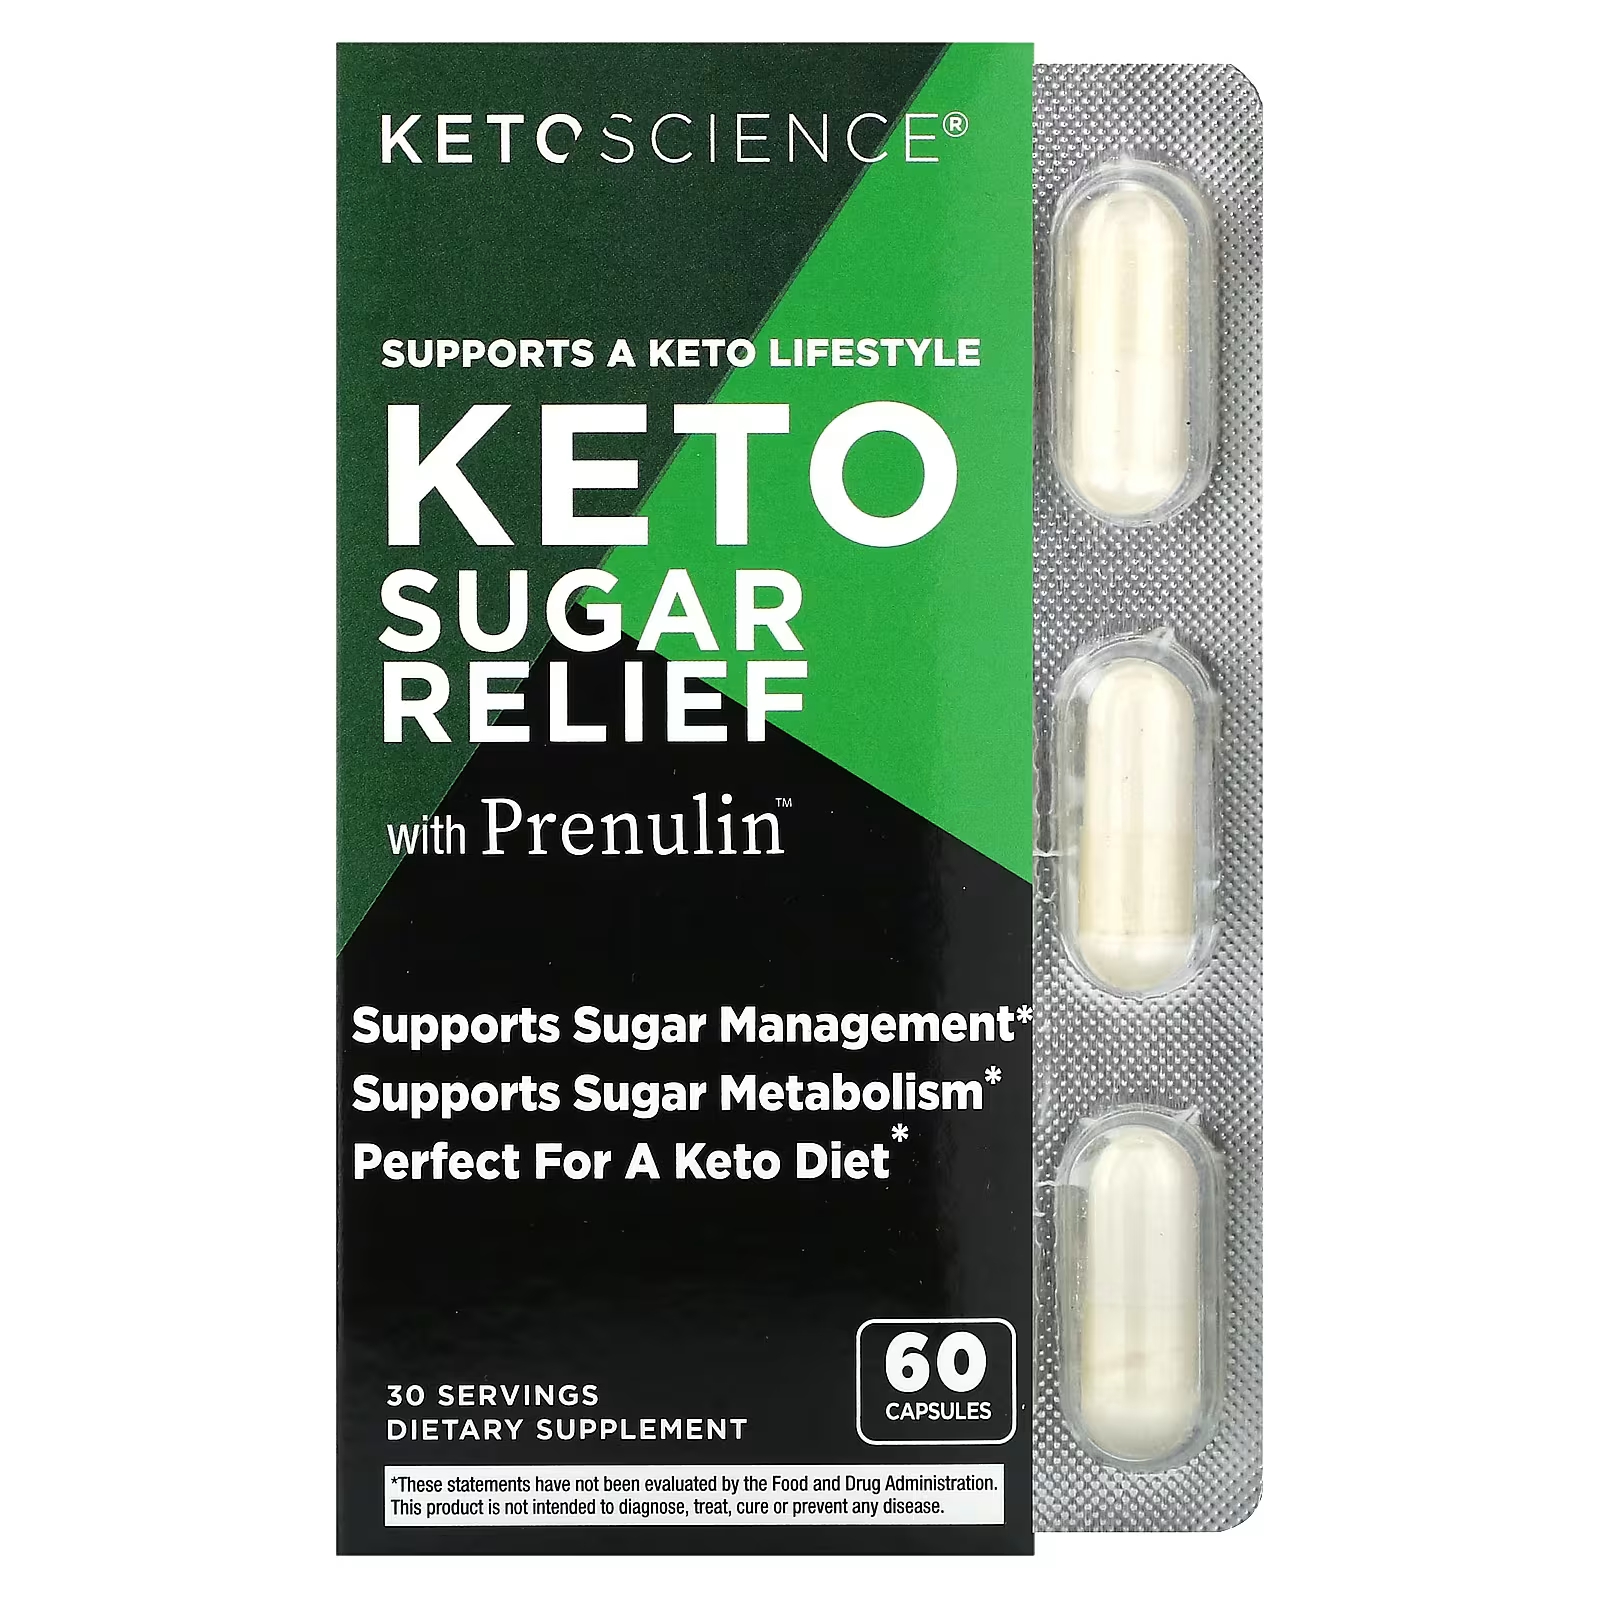 Пищевая добавка Keto Science Keto Sugar Relief с пренулином, 60 капсул пищевая добавка ketologic relax keto bhb suntheanine 60 капсул